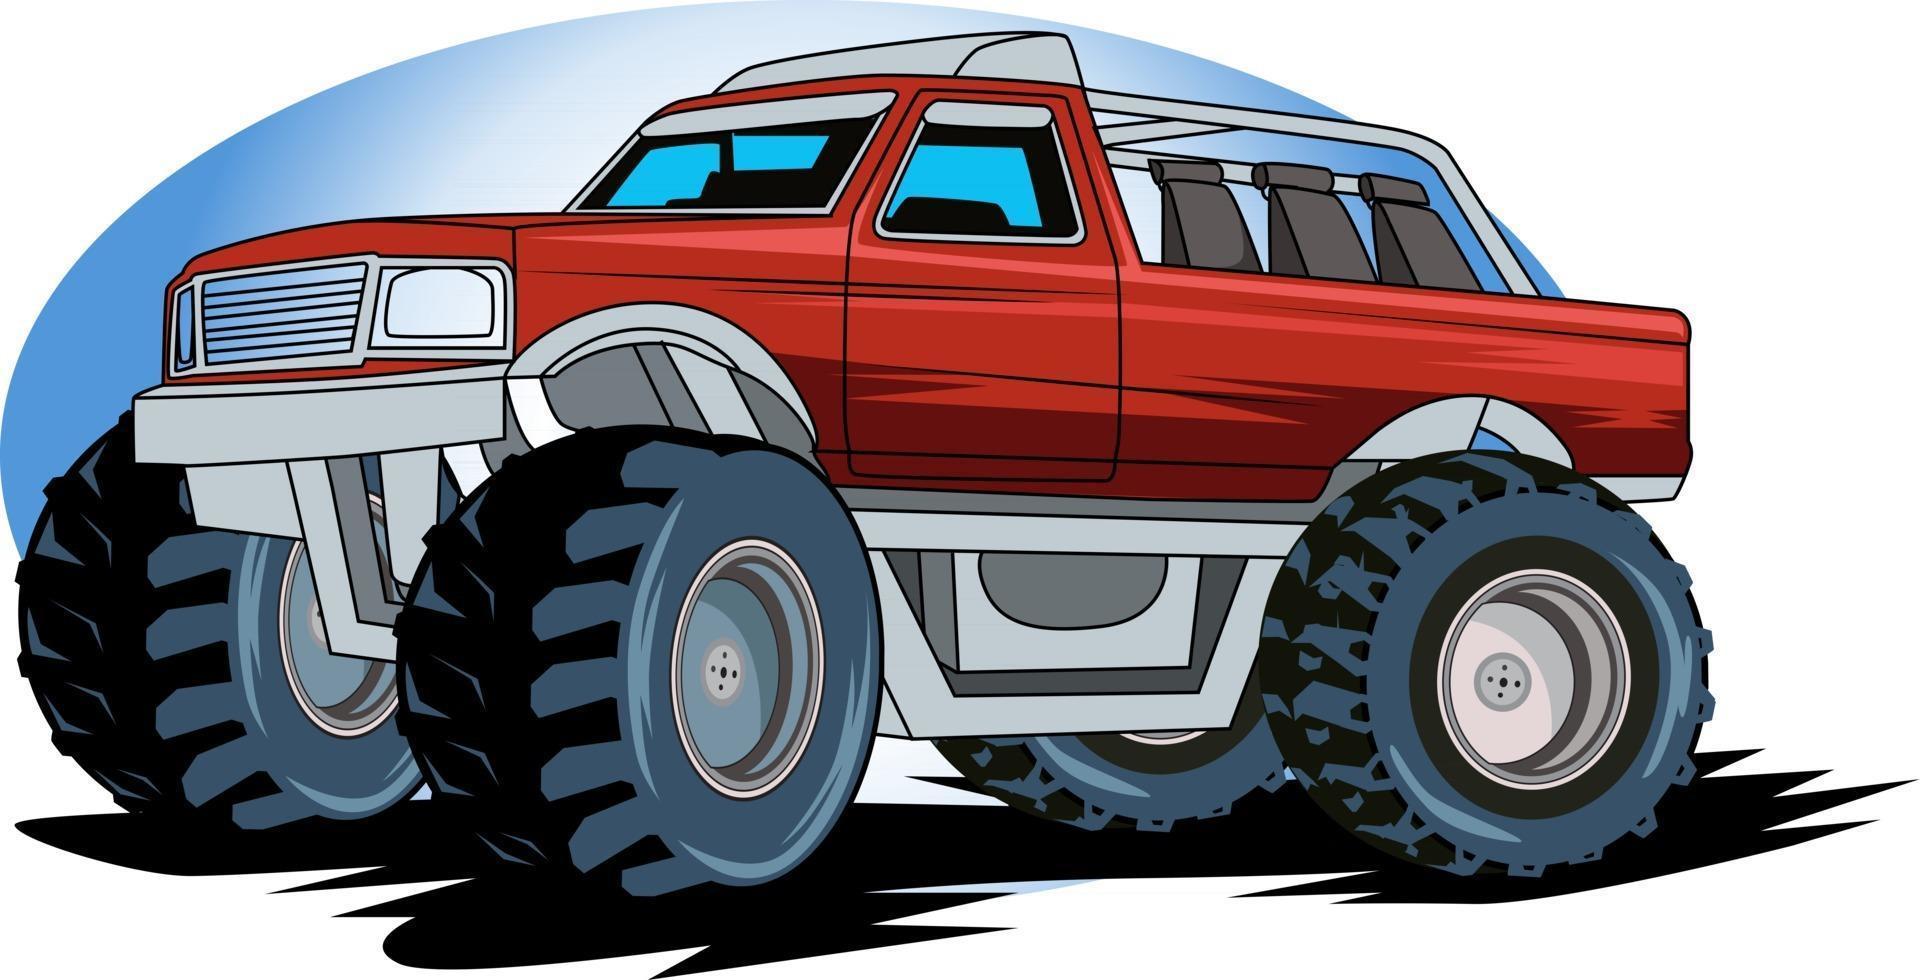 monster truck car illustration vector